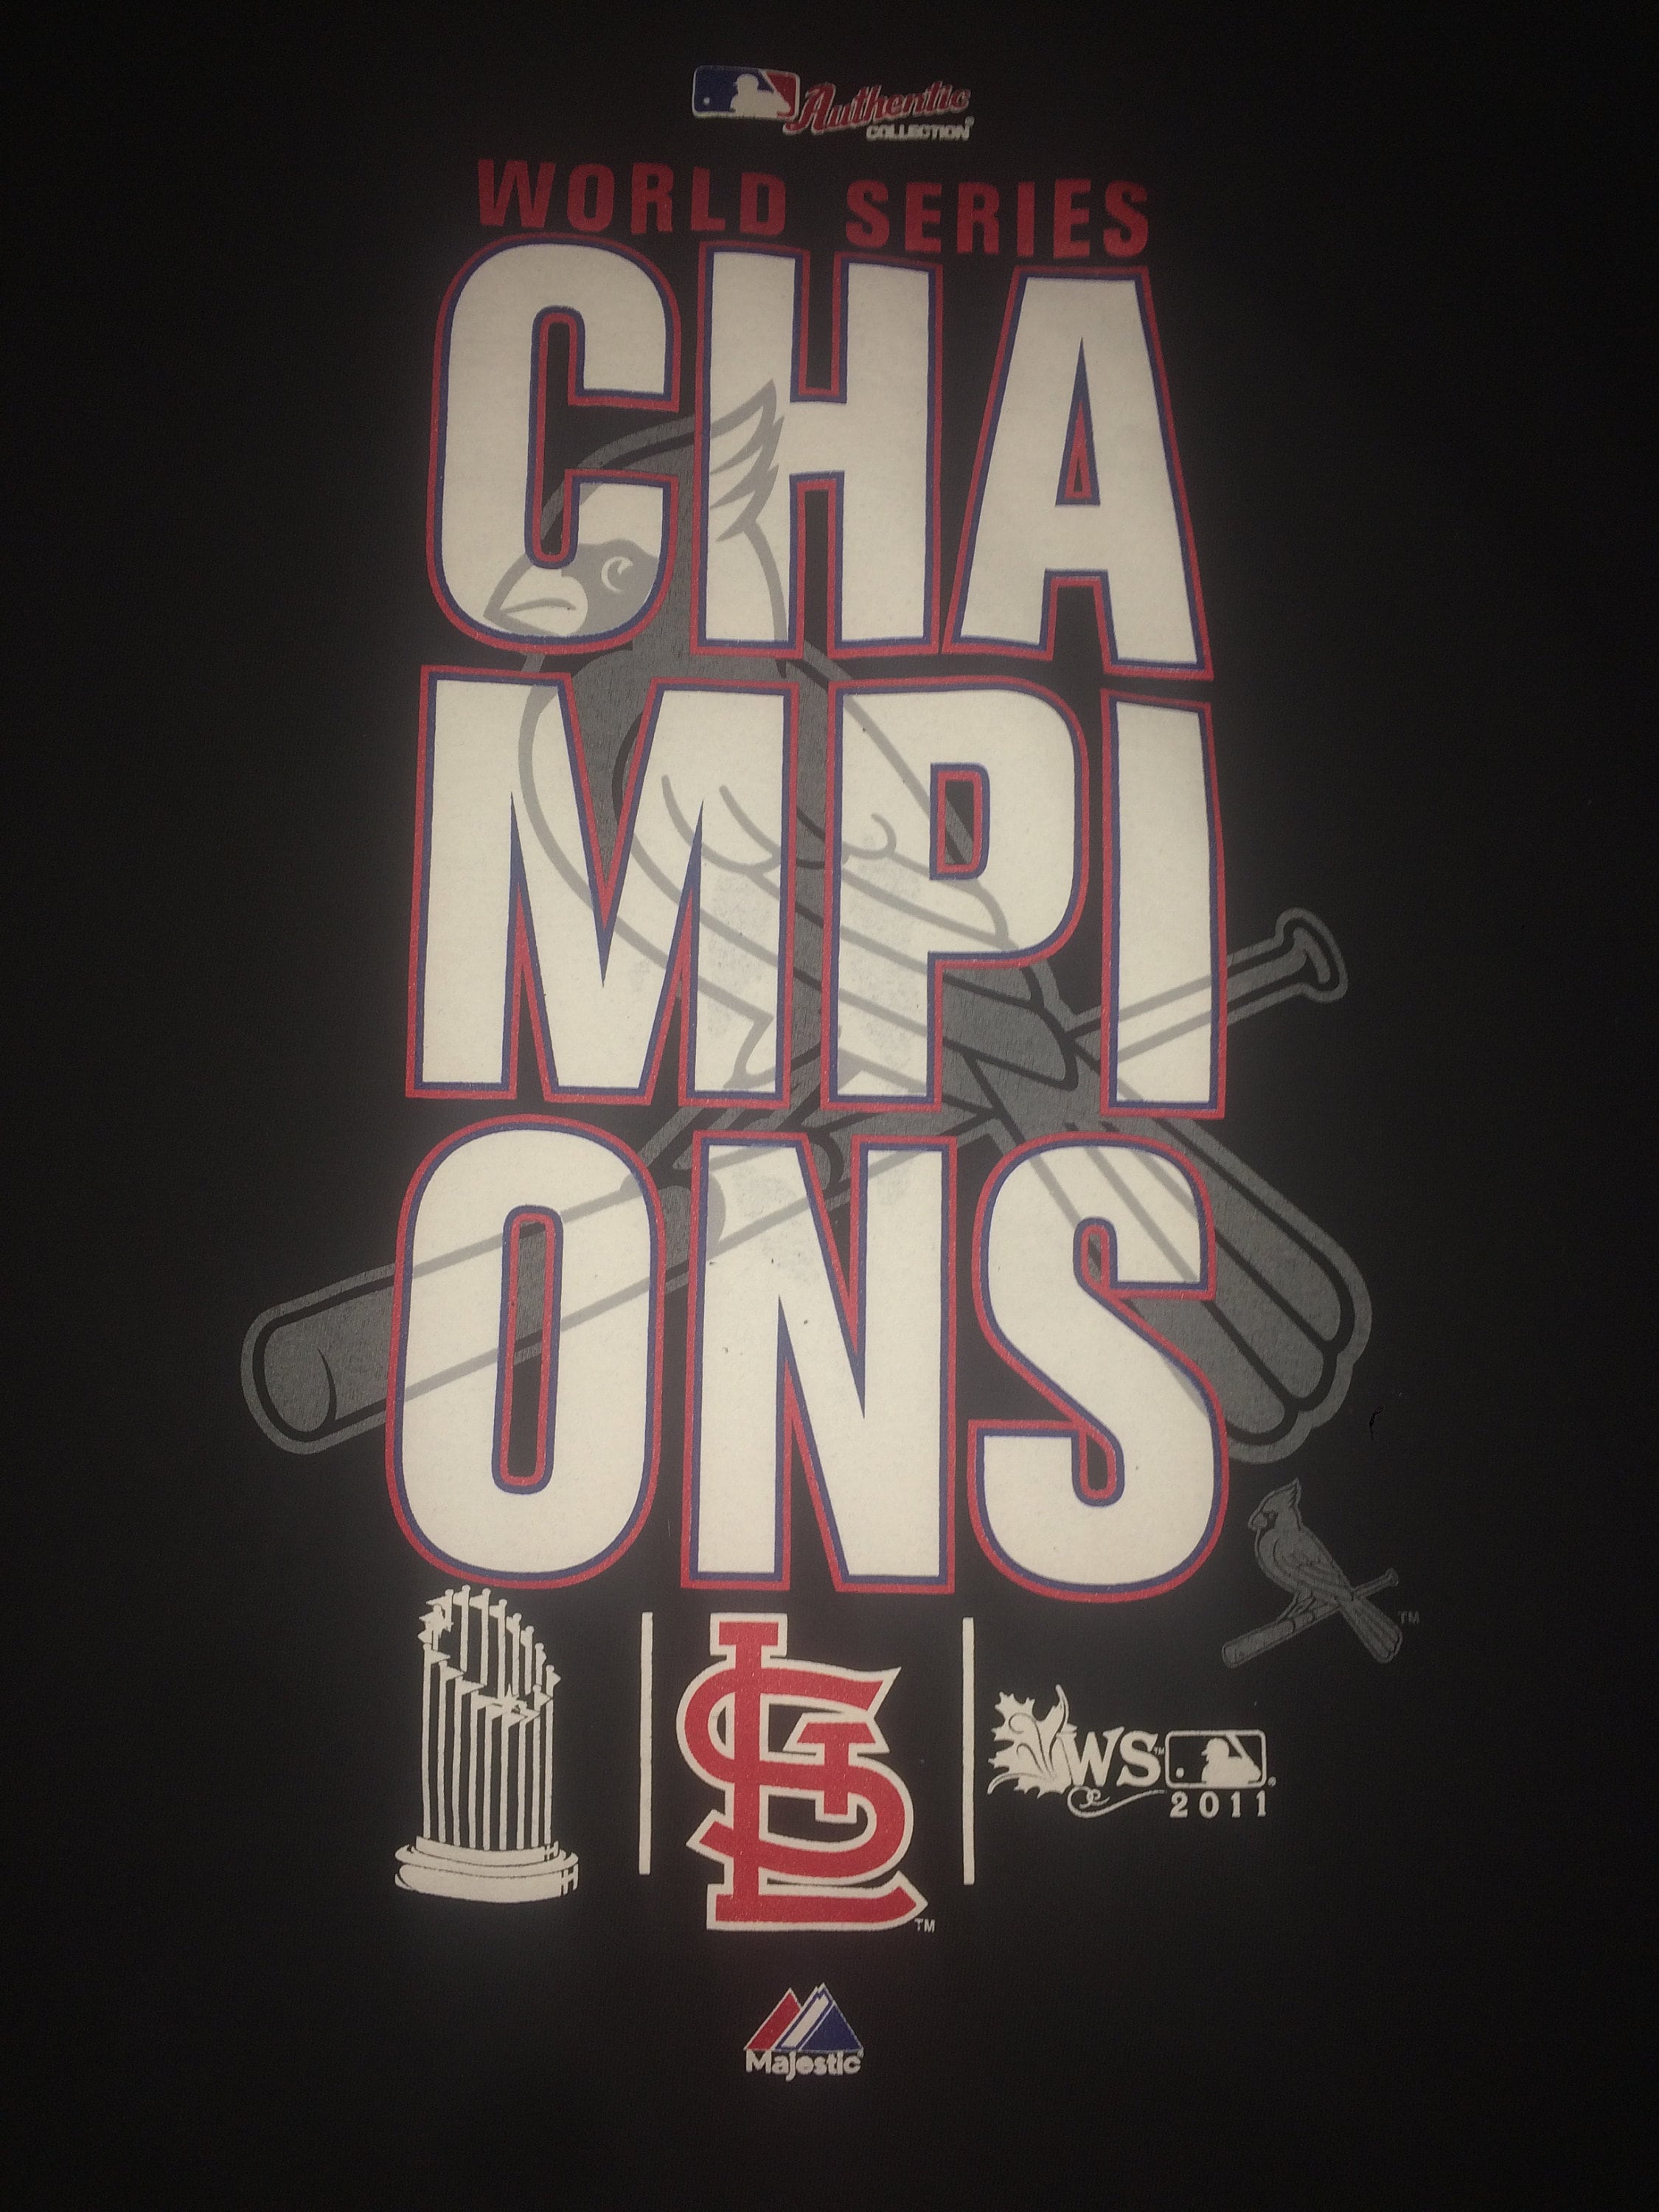 St. louis Cardinals World Series Champions 2011 T Shirt Size L